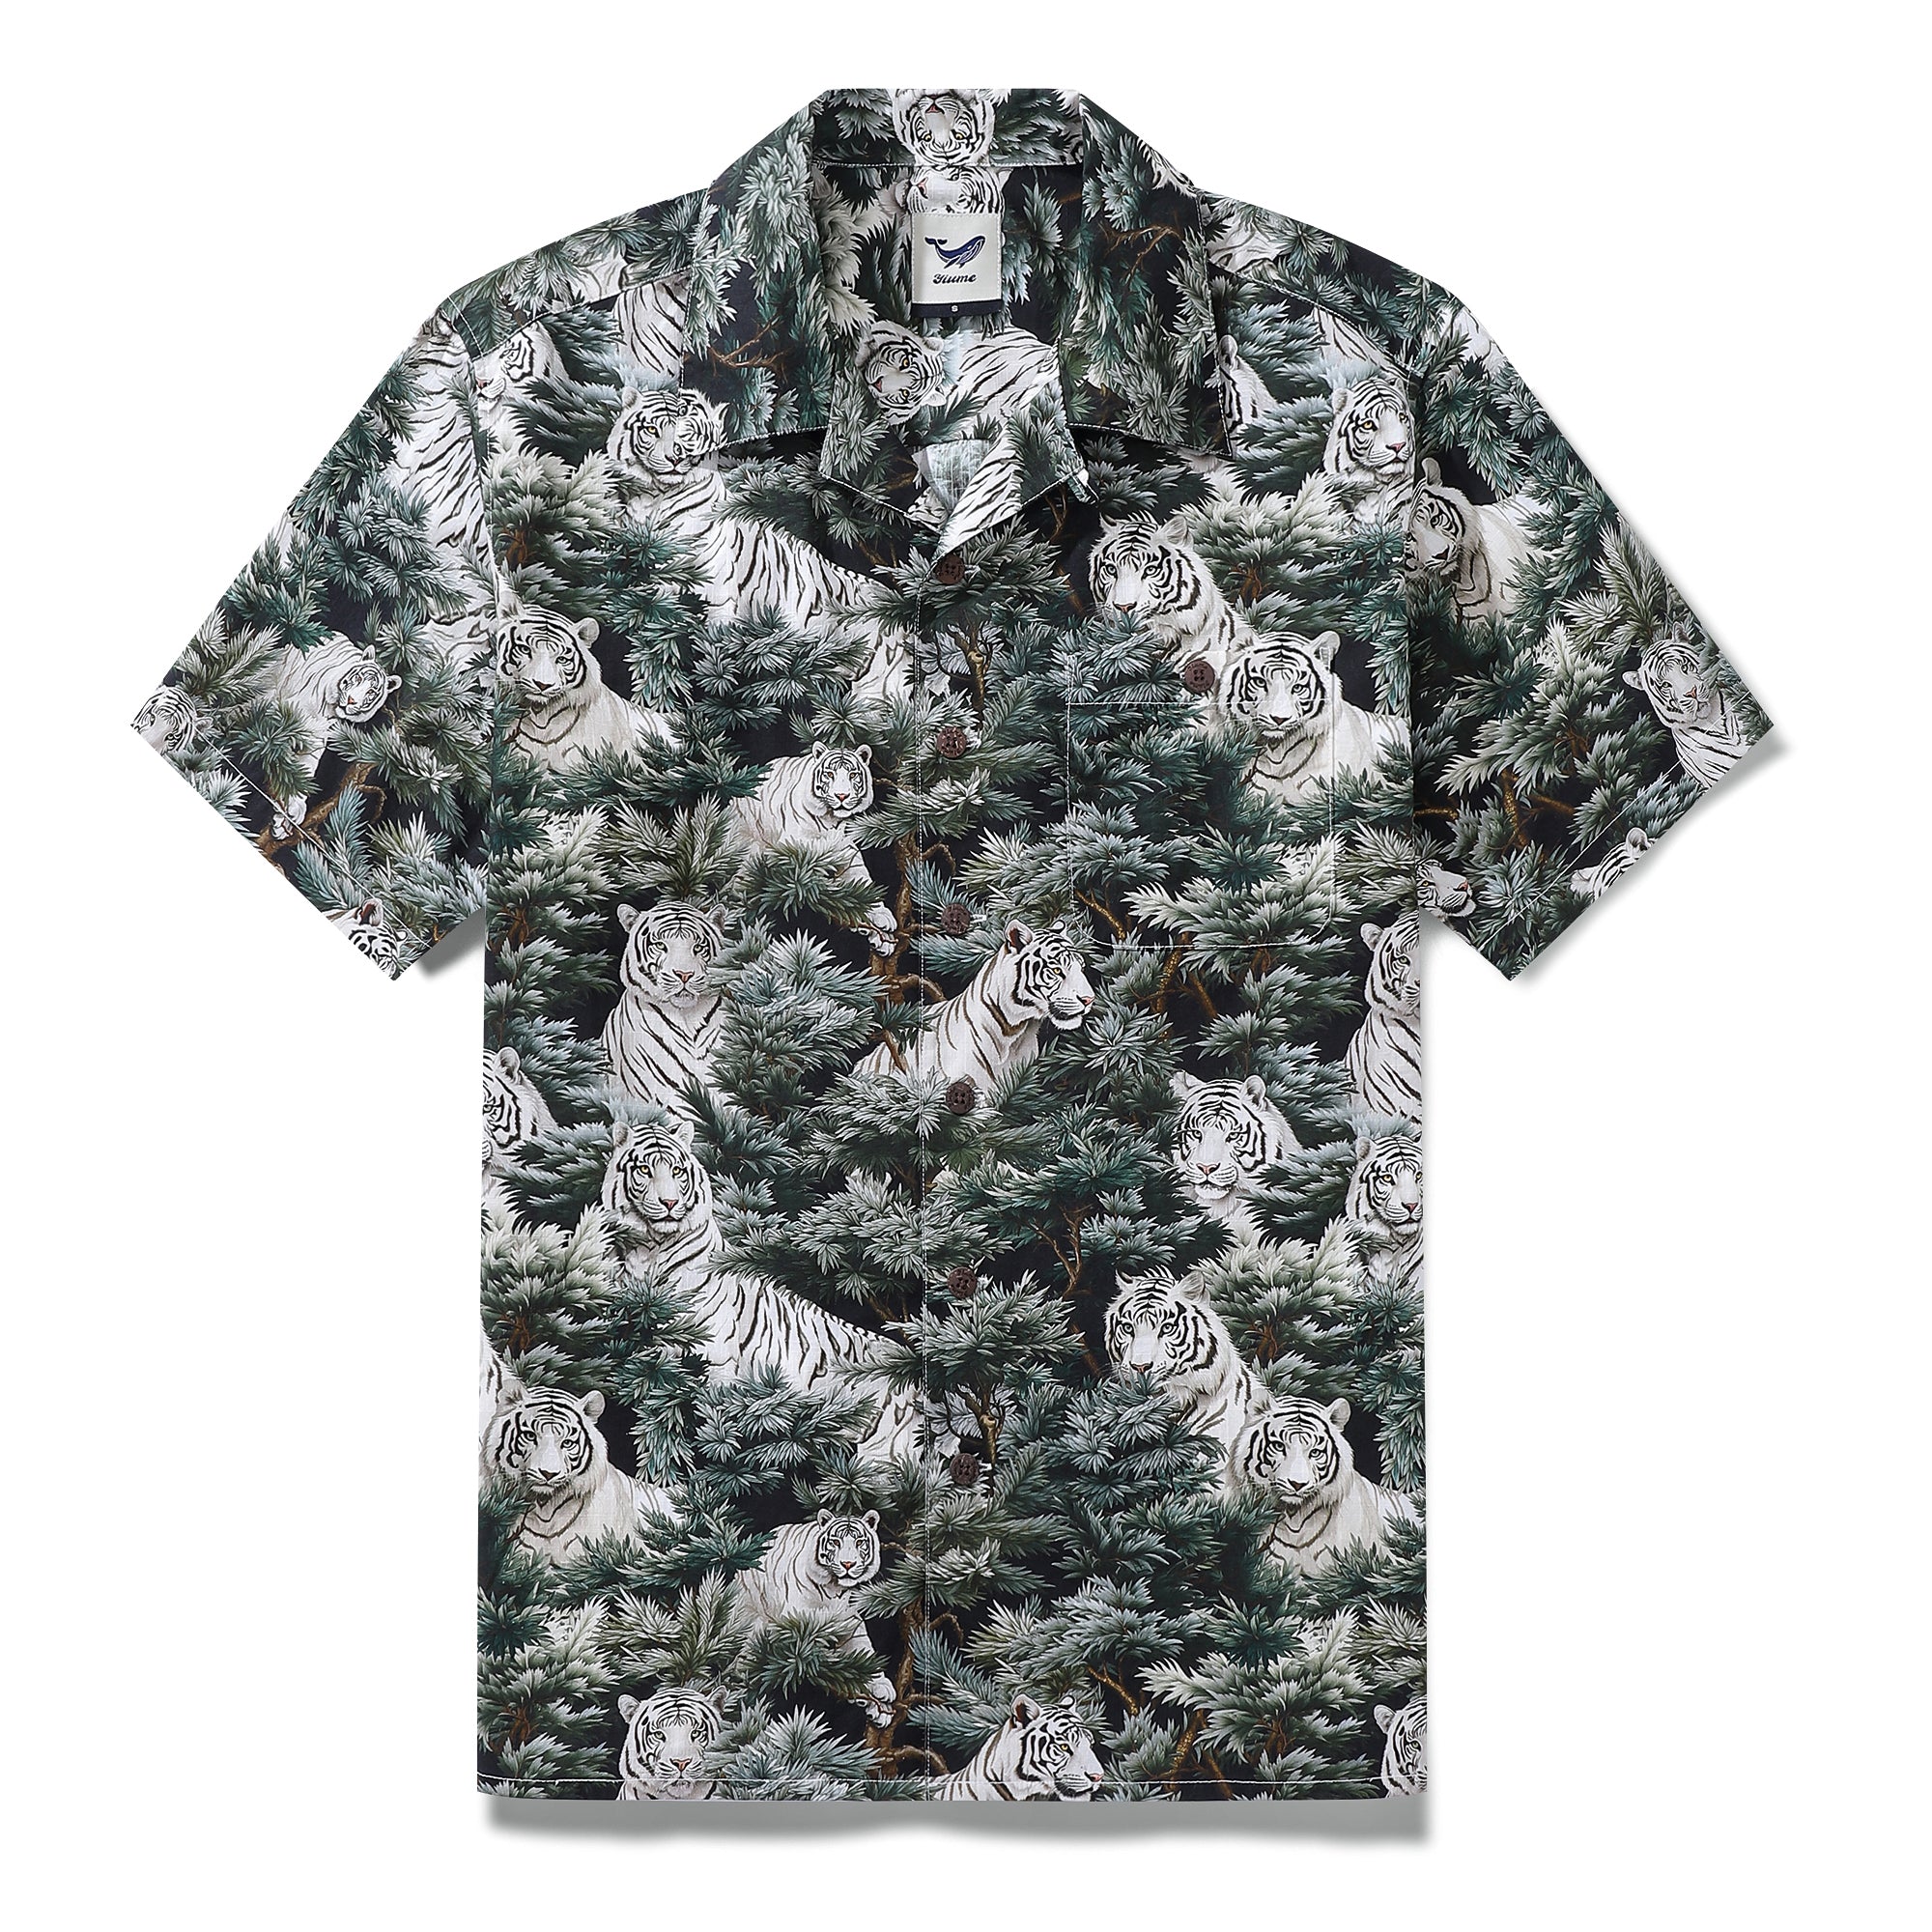 Hawaiian Shirt For Men Mighty Beast in the Pines Shirt Camp Collar 100% Cotton